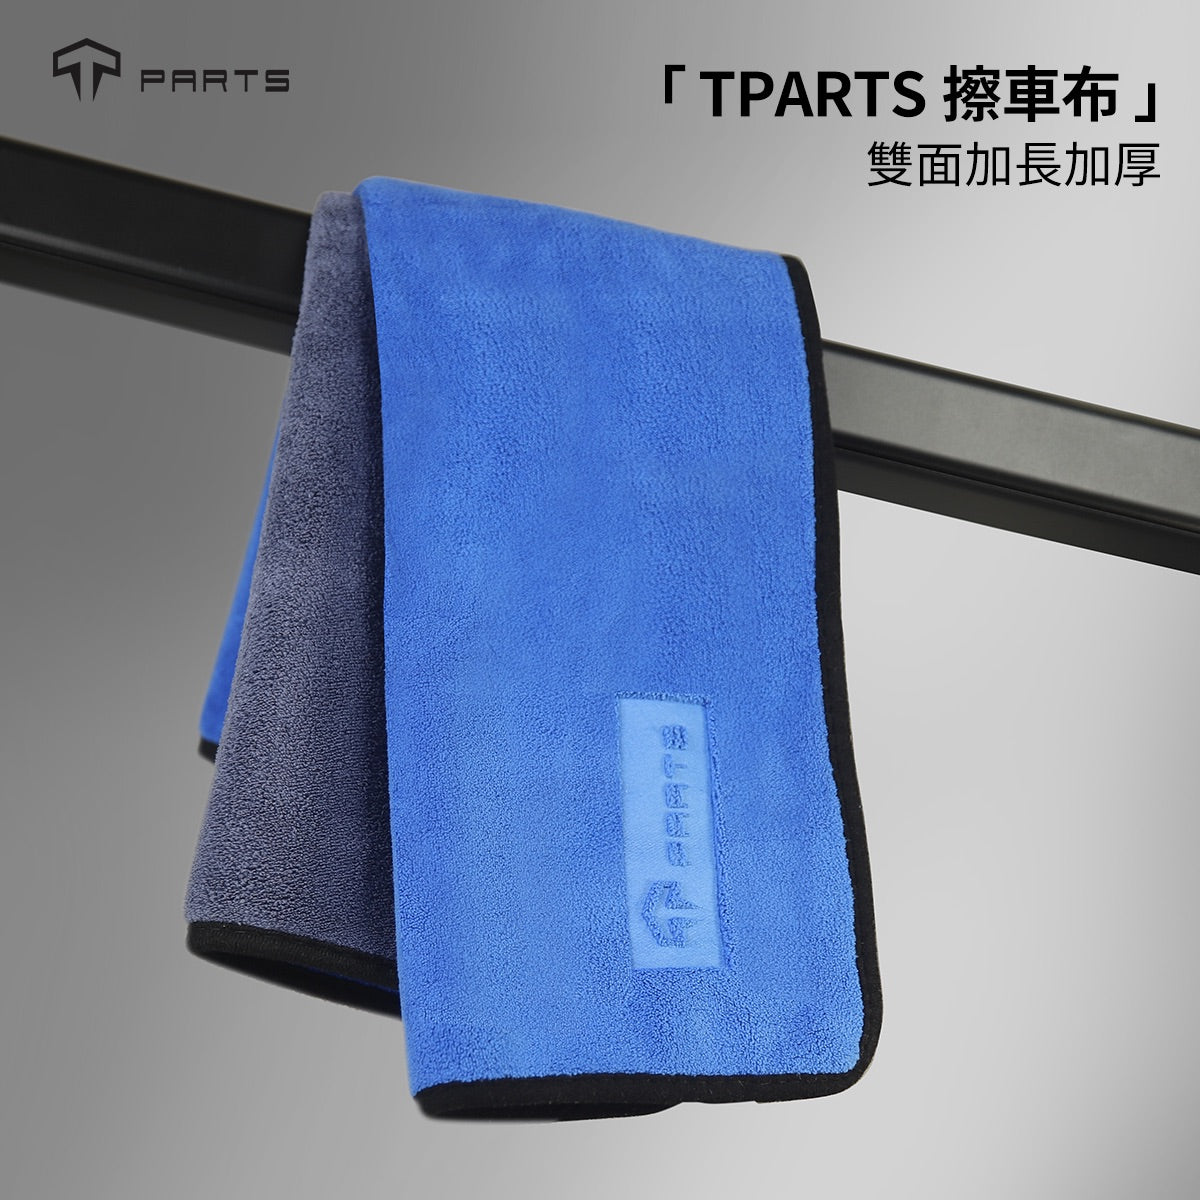 TParts 專用擦車布